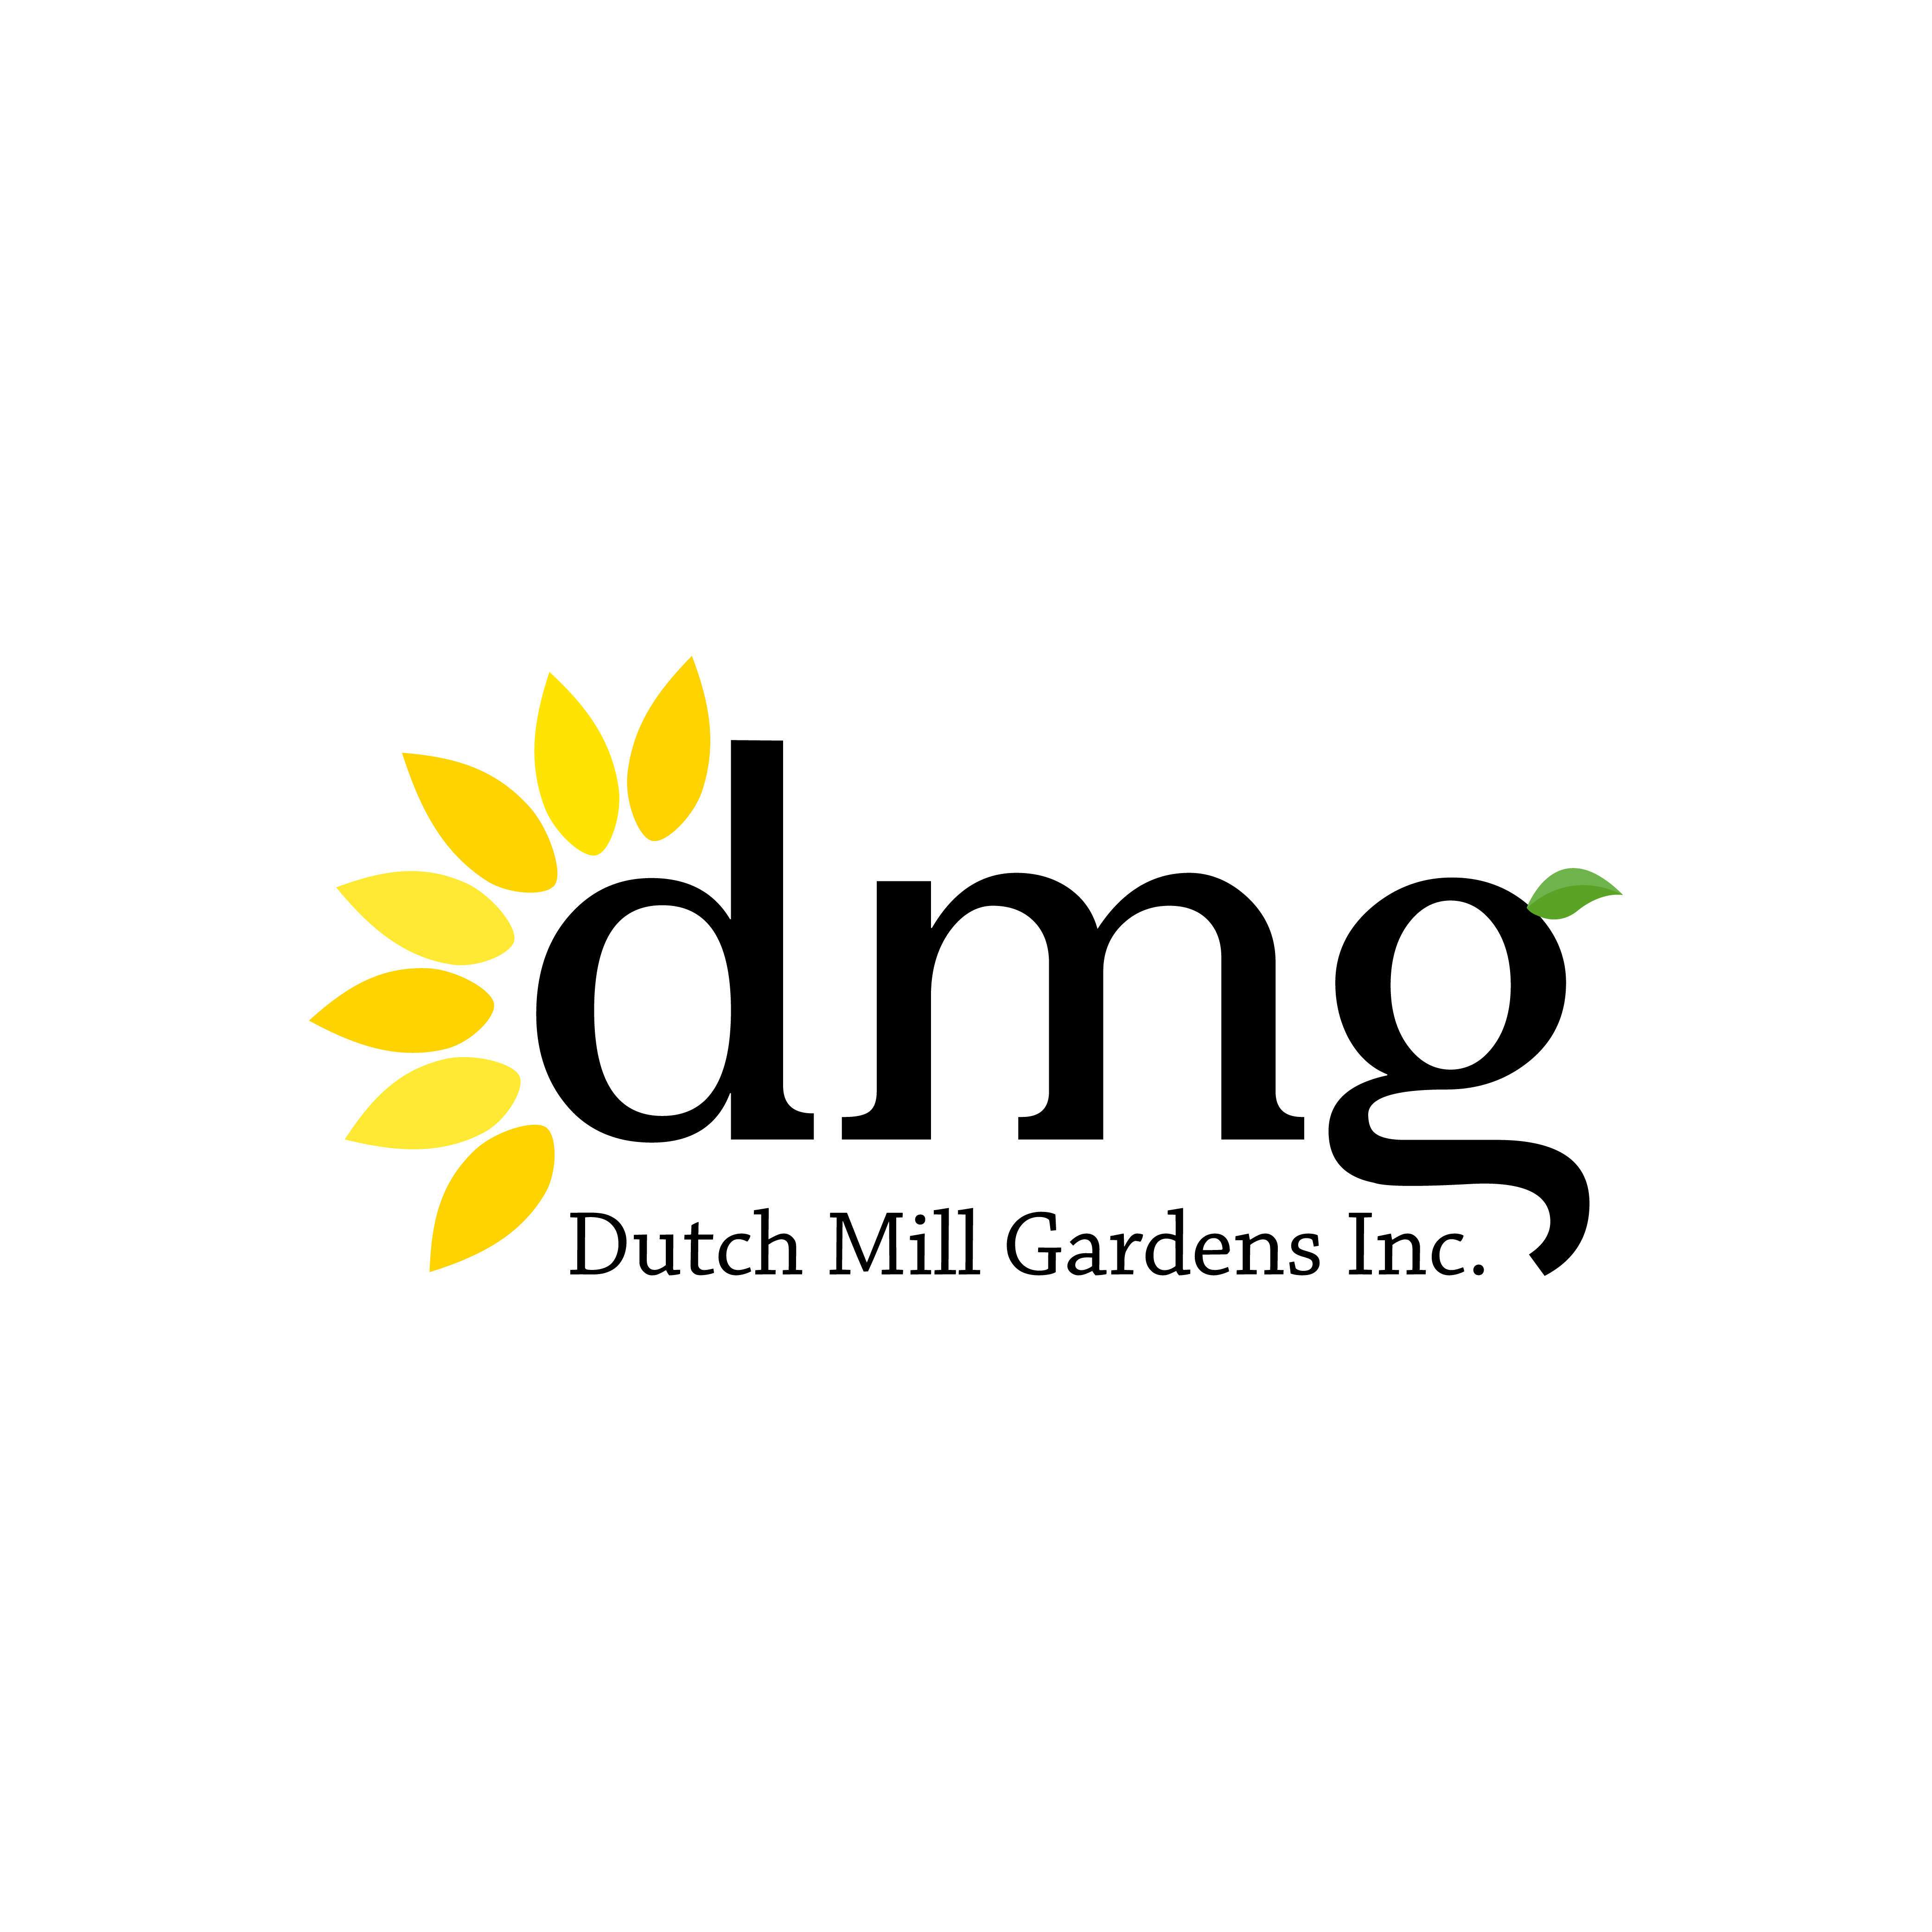 Dutch Mill Gardens